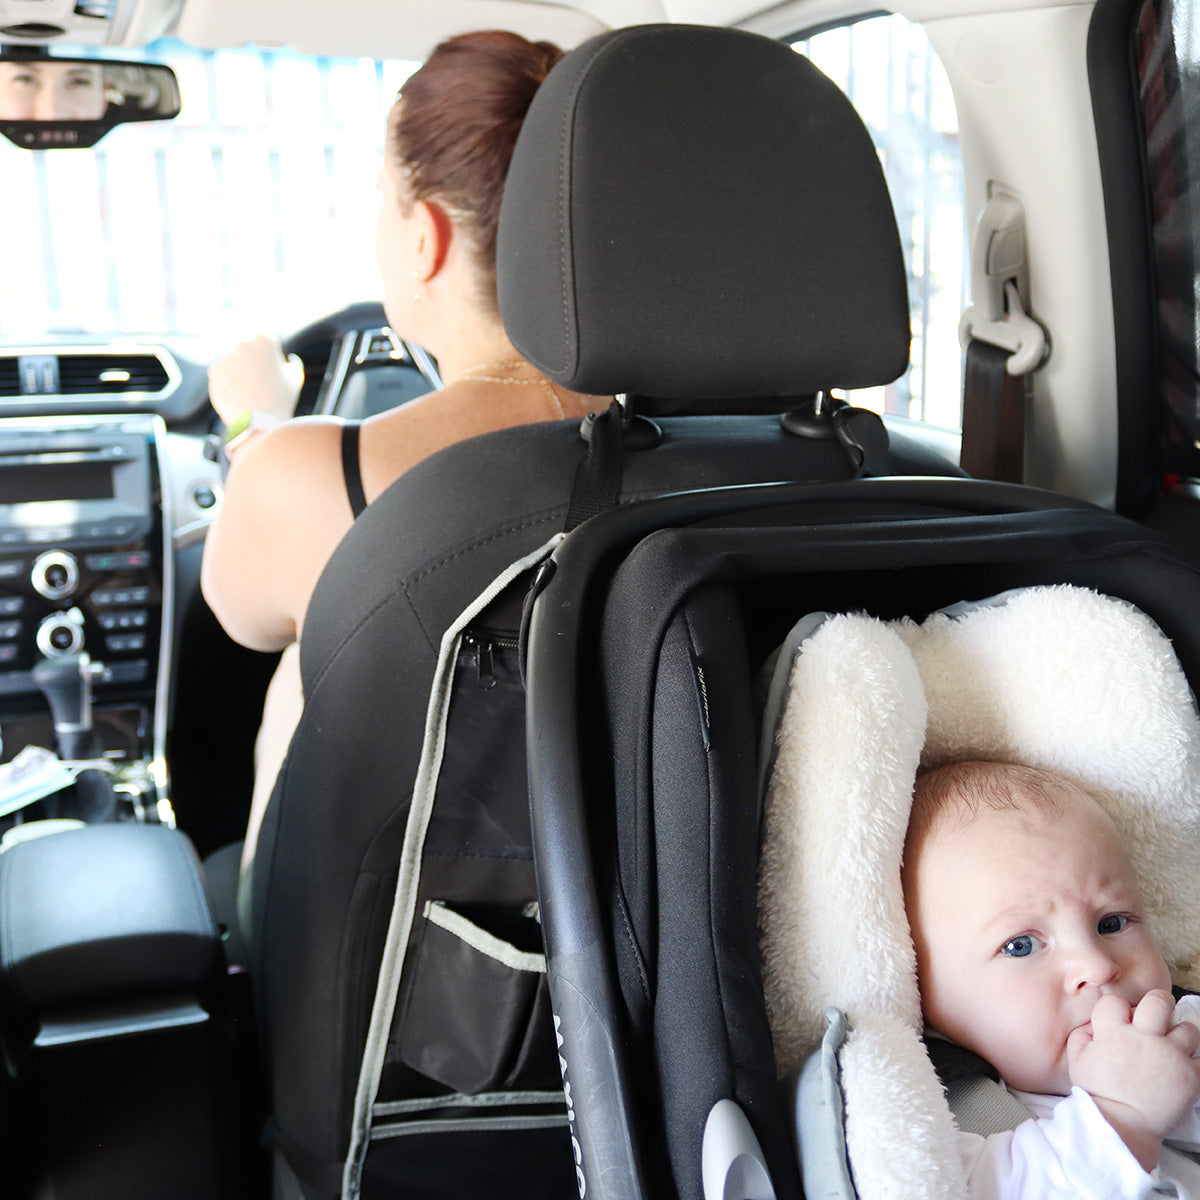 Snuggletime Baby-in-Sight Auto Mirror